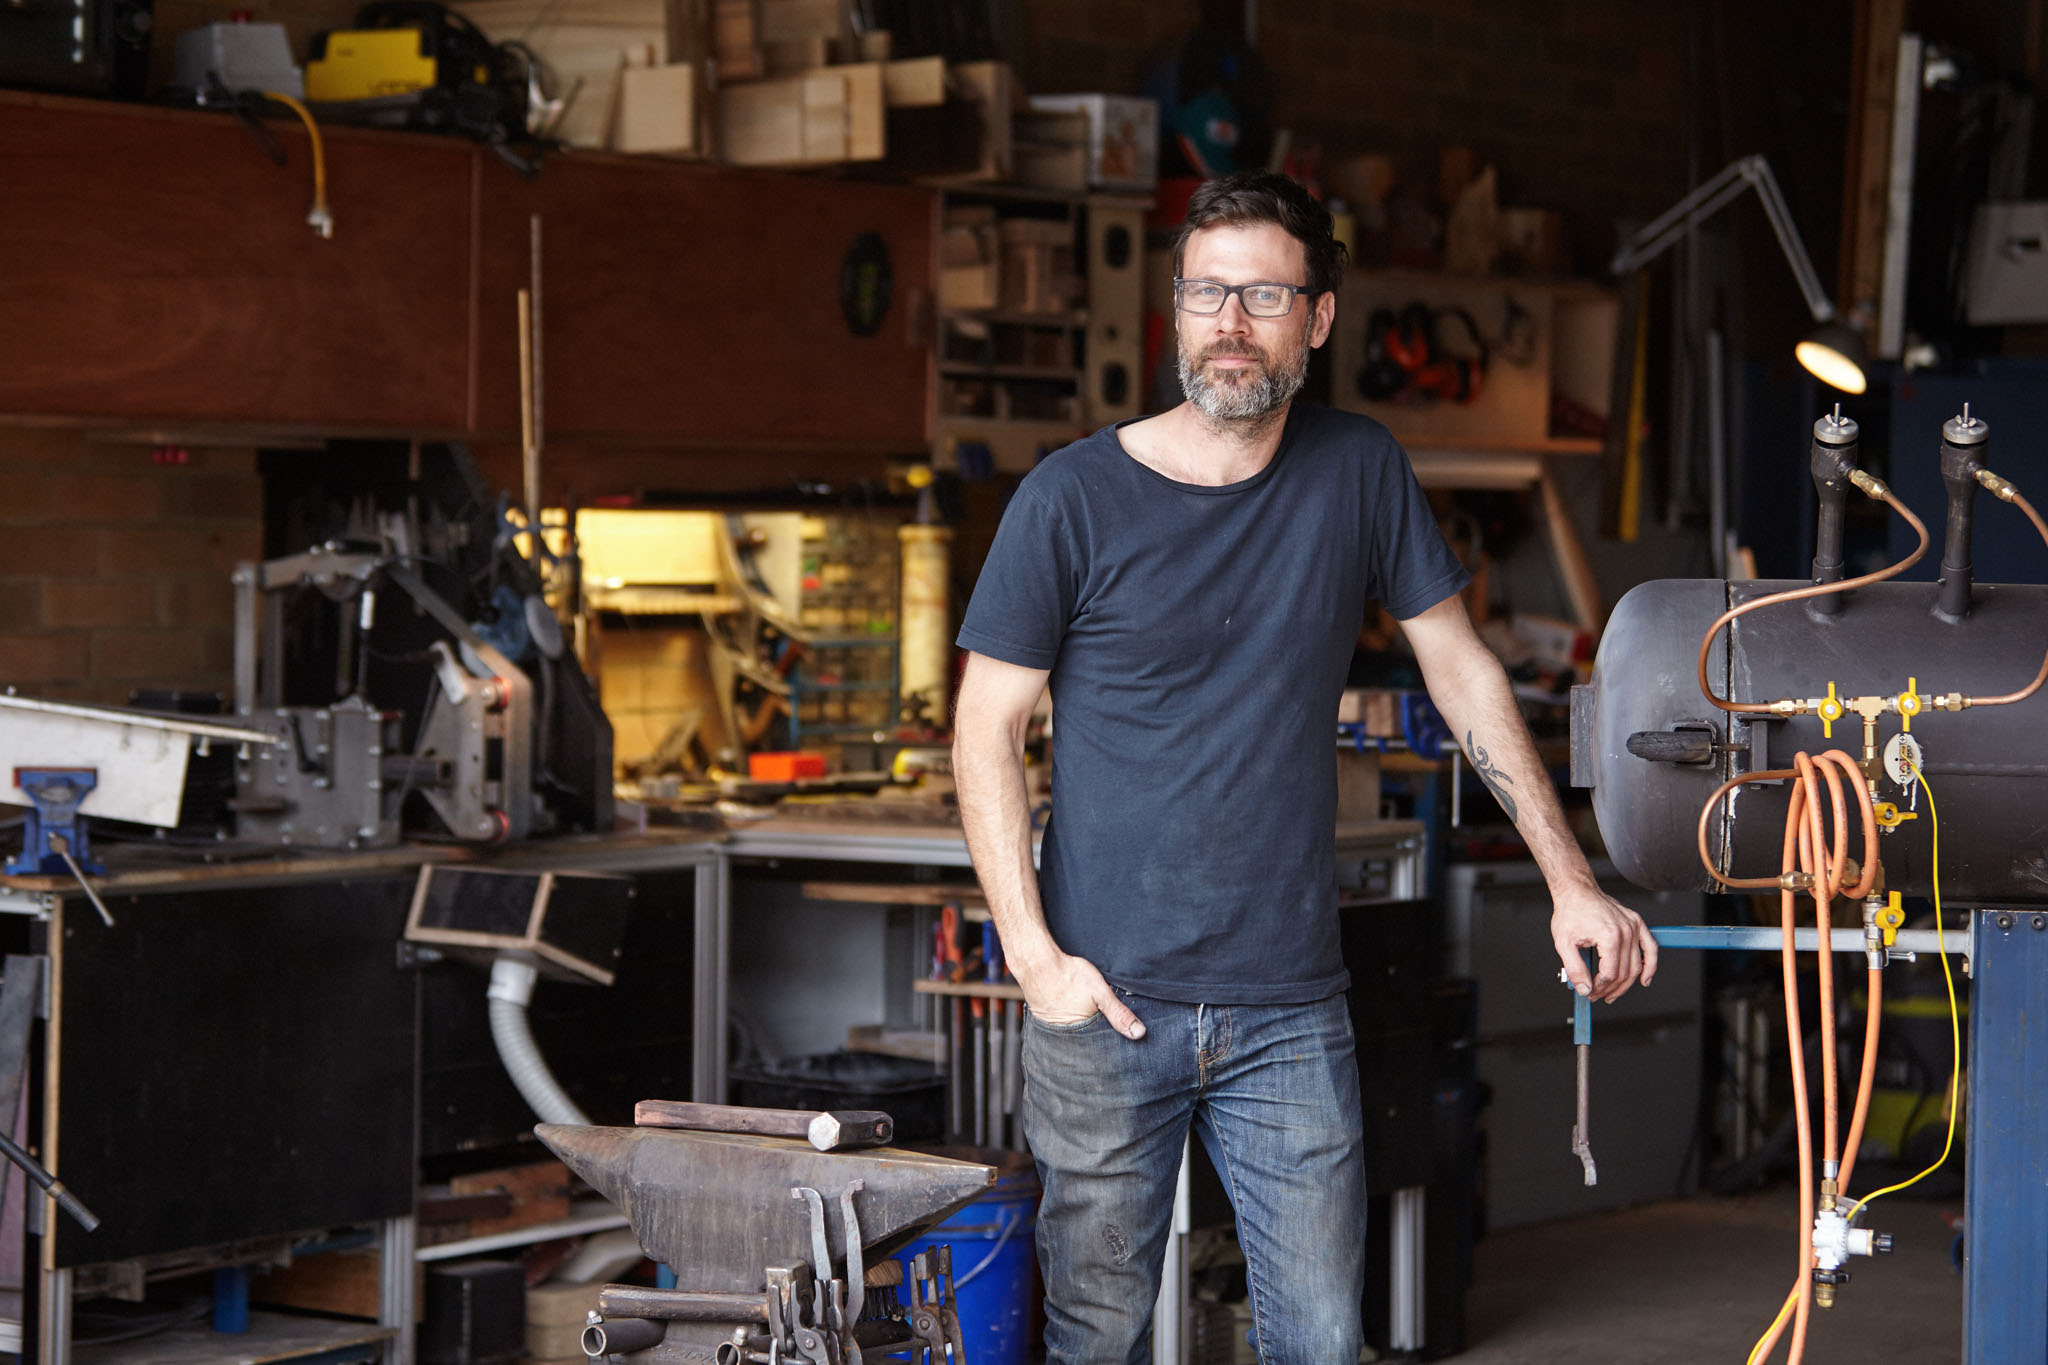 Robert Trimarchi custom knife maker standing in his workshop Melbourne commercial photographer